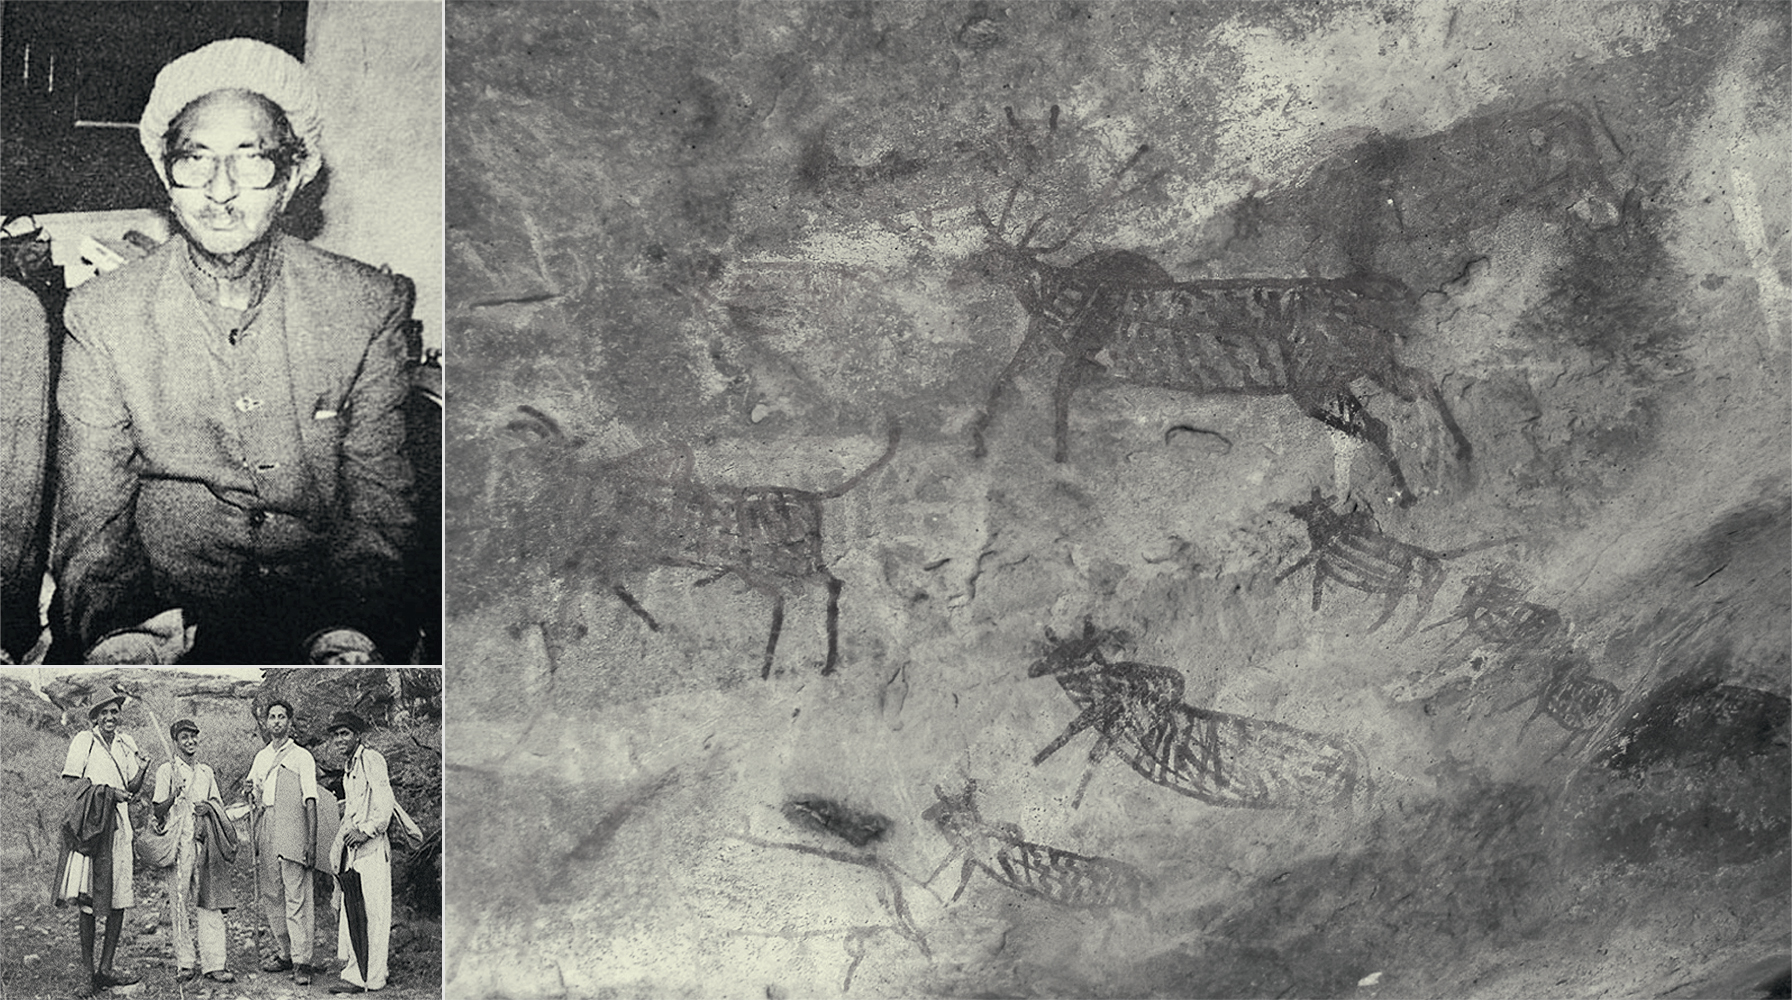 India Rock Art Cave Paintings Dr V S Wakankar Bhimbetka India World Heritage List of UNESCO Bradshaw Foundation